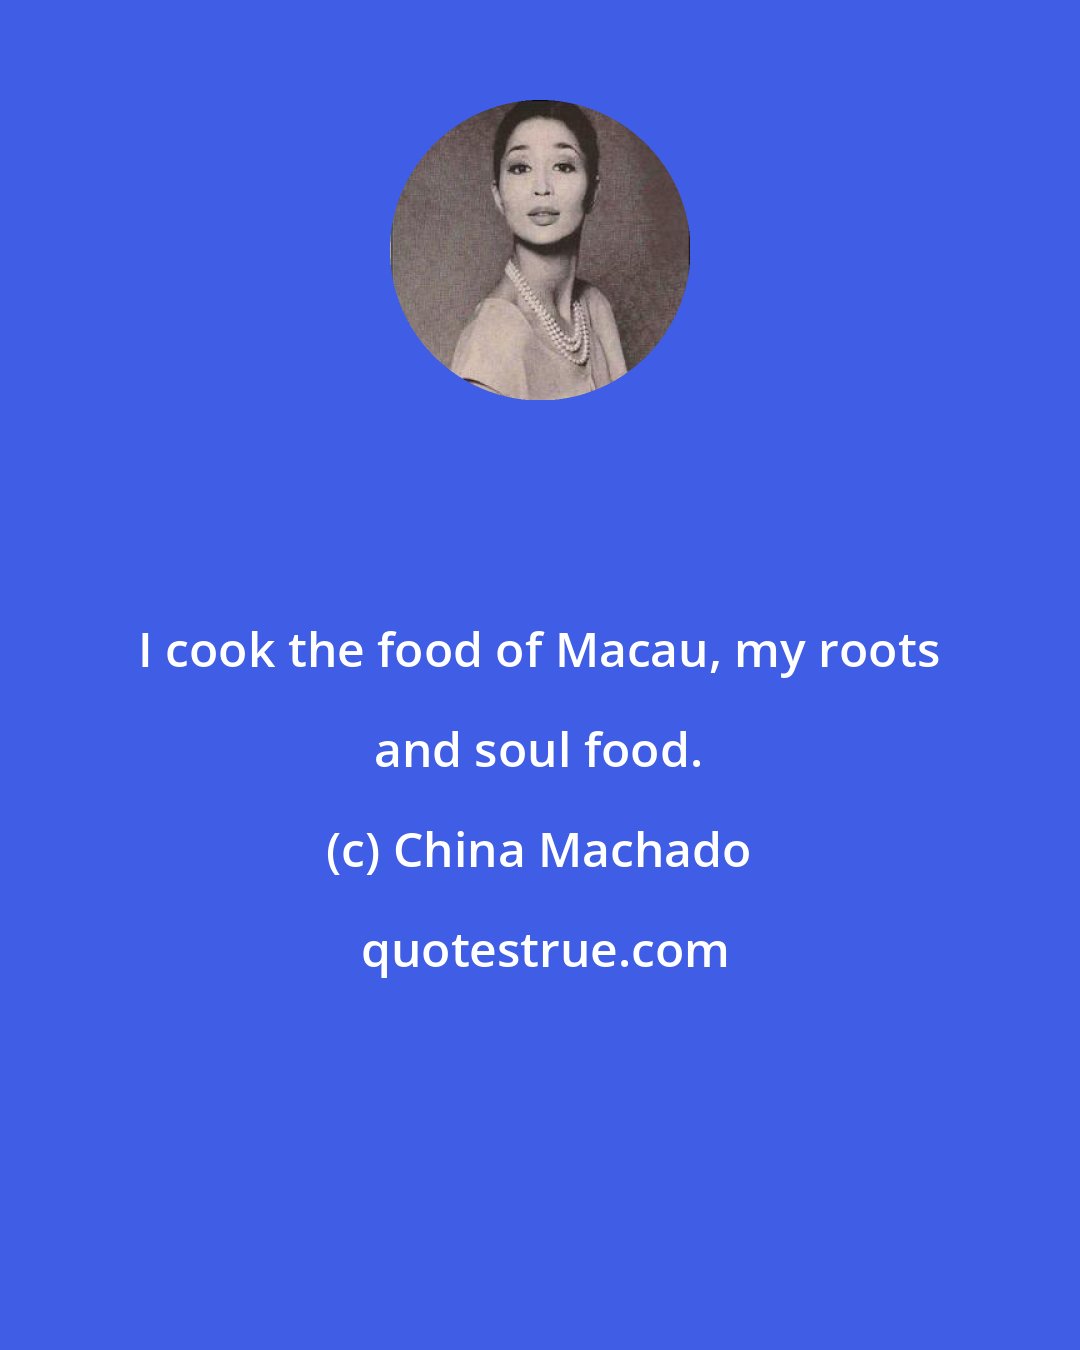 China Machado: I cook the food of Macau, my roots and soul food.